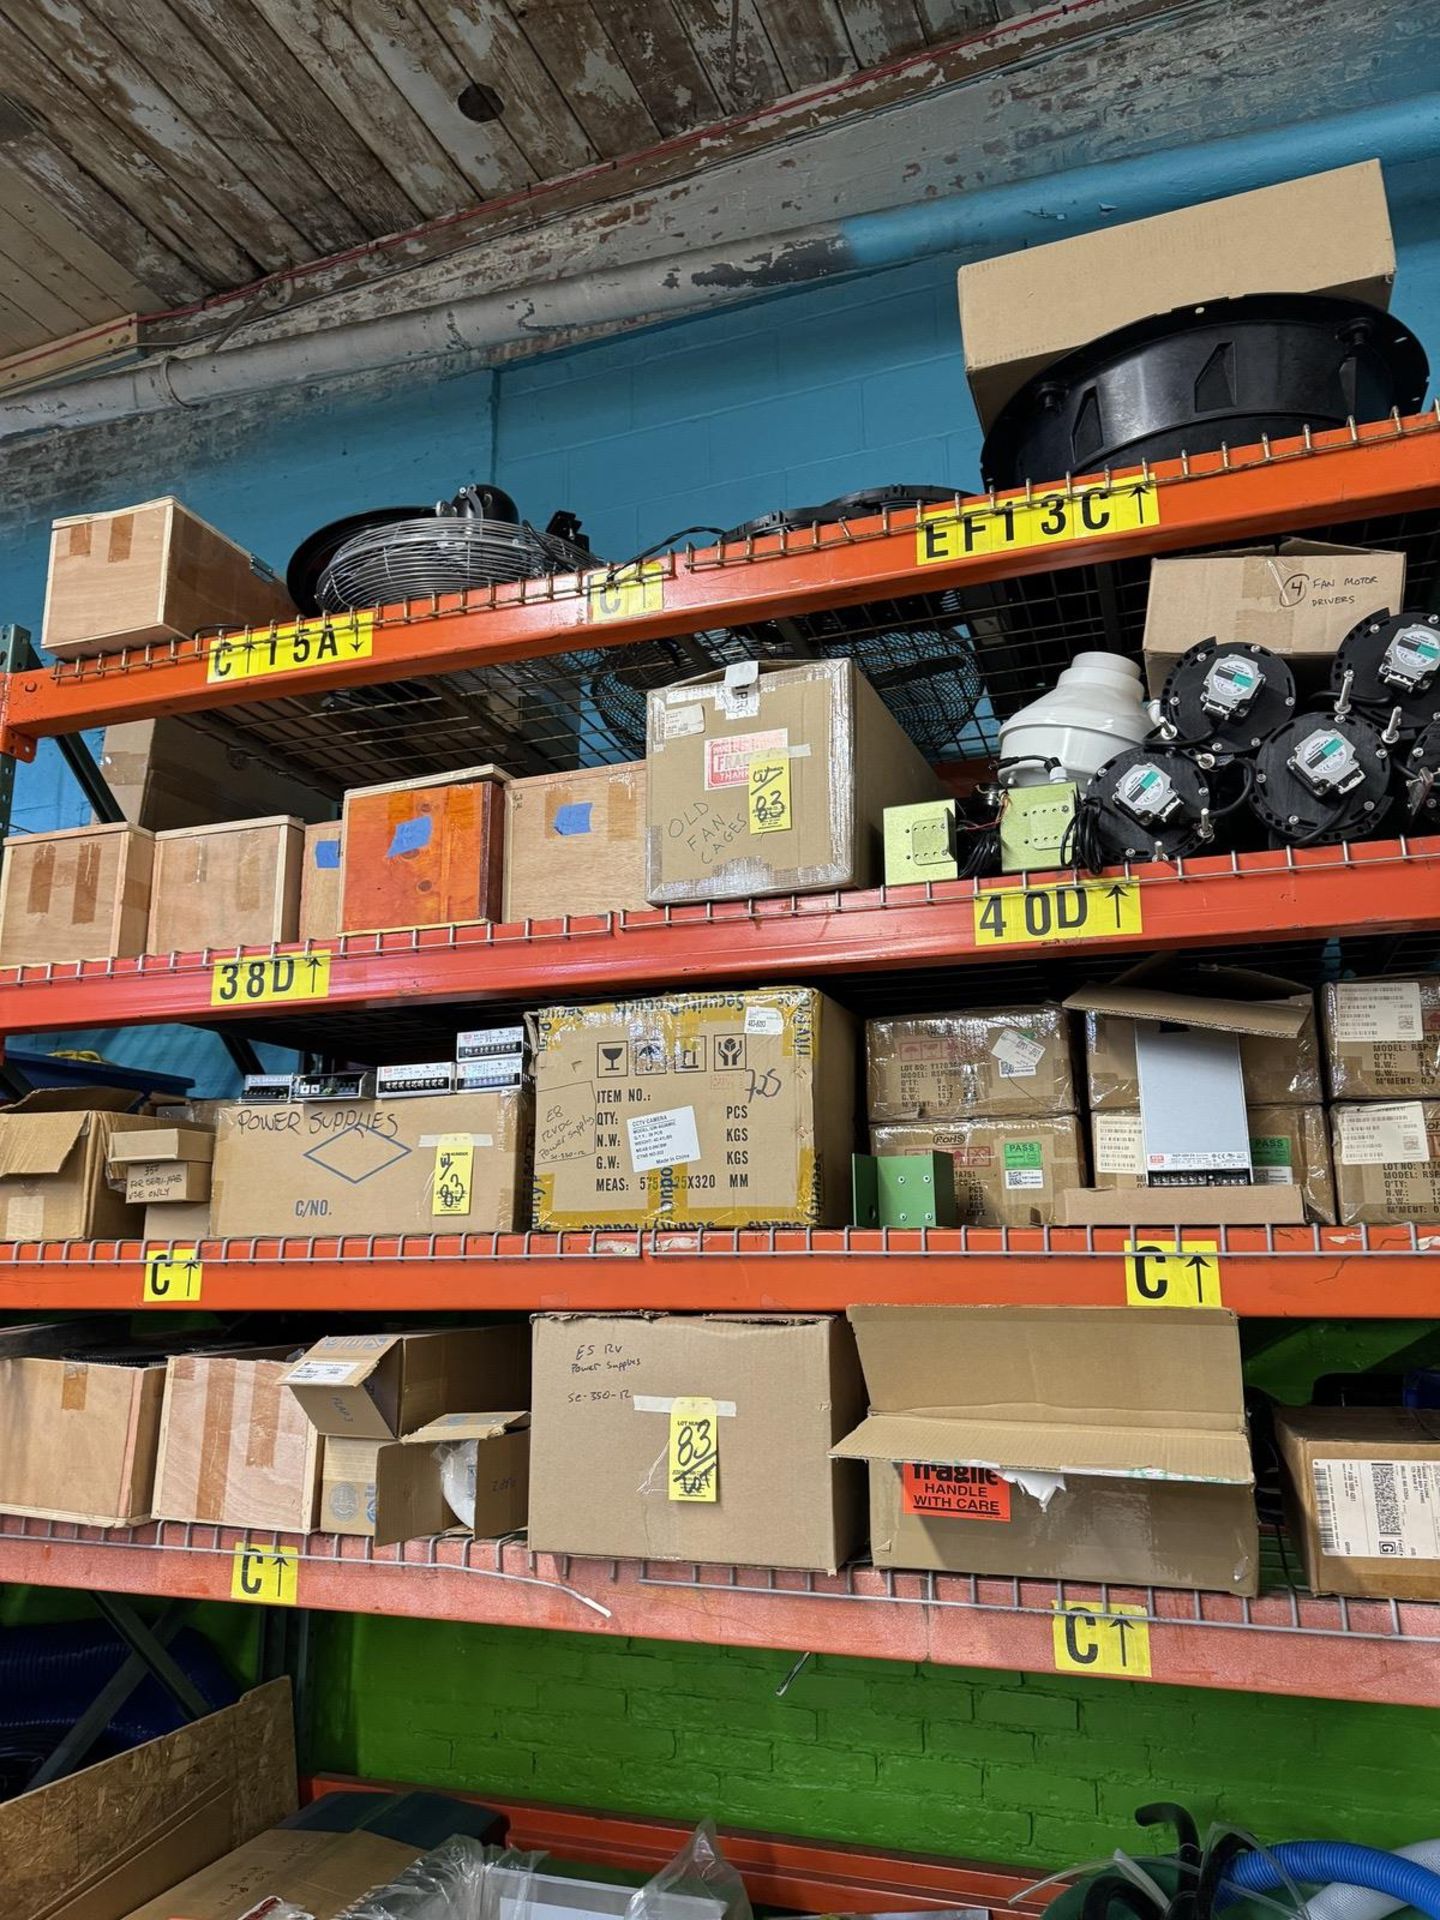 Contants of Shelves Including Power Supplies, Filters, Fan Cages, Fans, hoses, Alum. Rail, Plastic